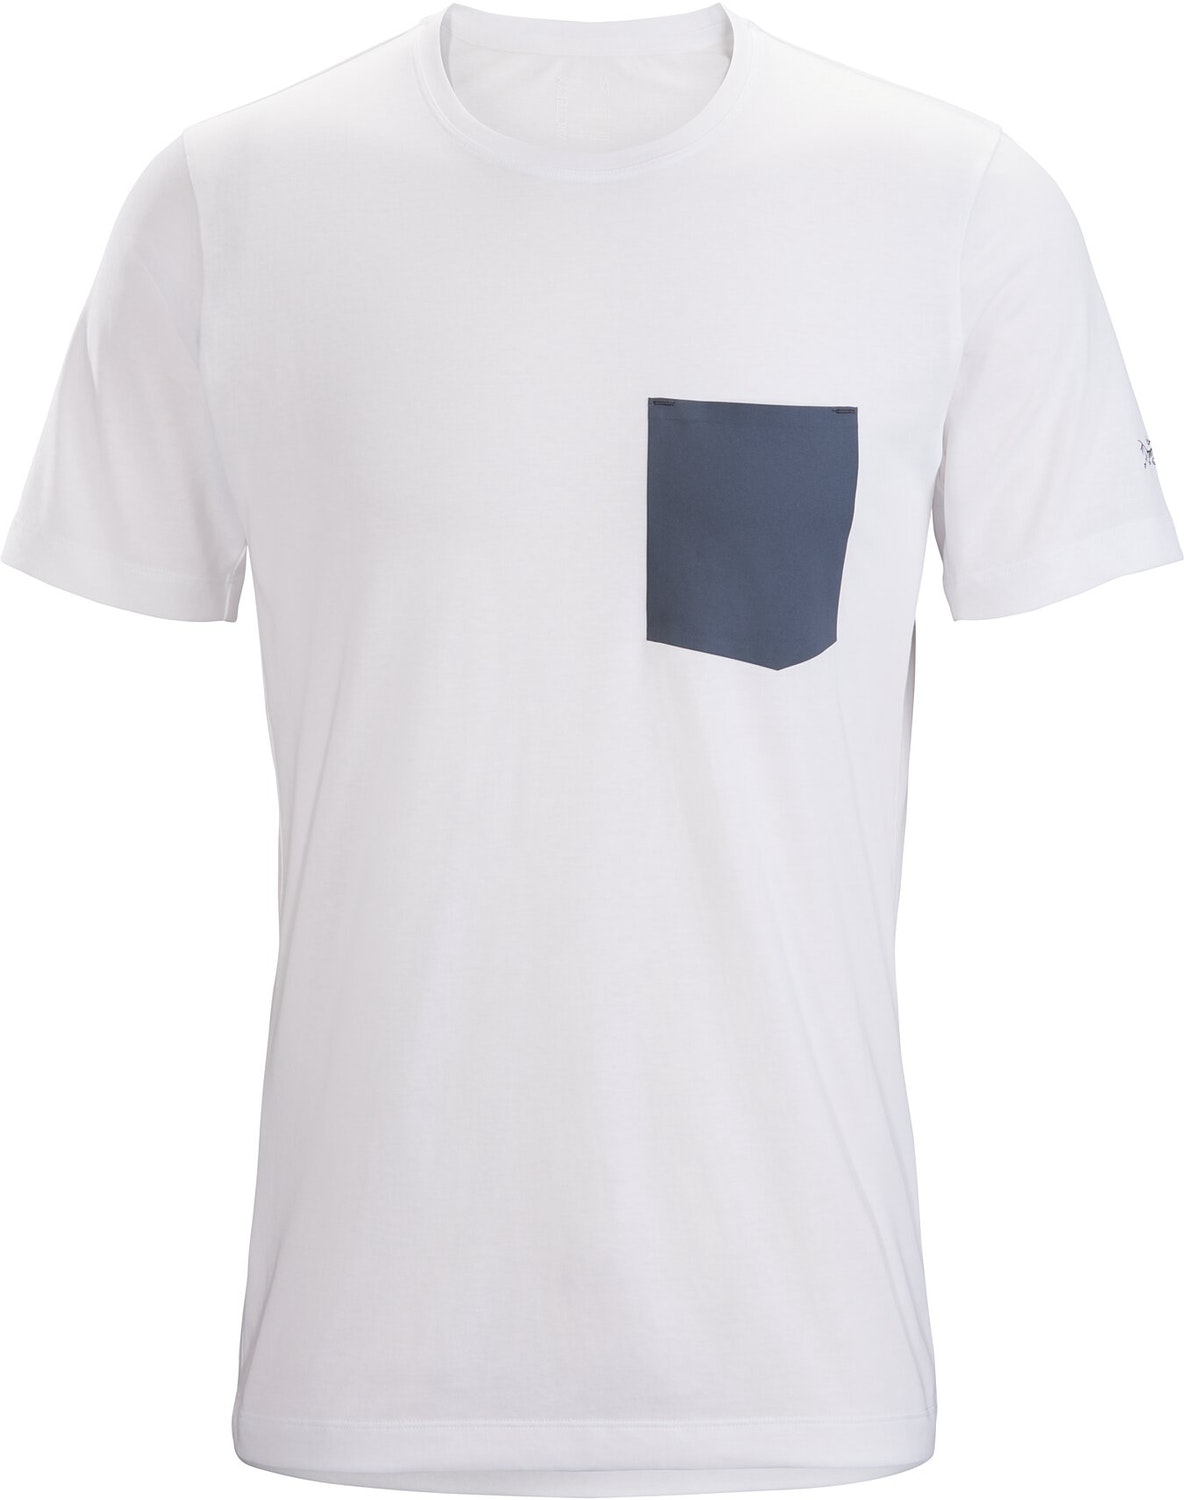 T-shirt Arc'teryx Eris Uomo Bianche - IT-5149375